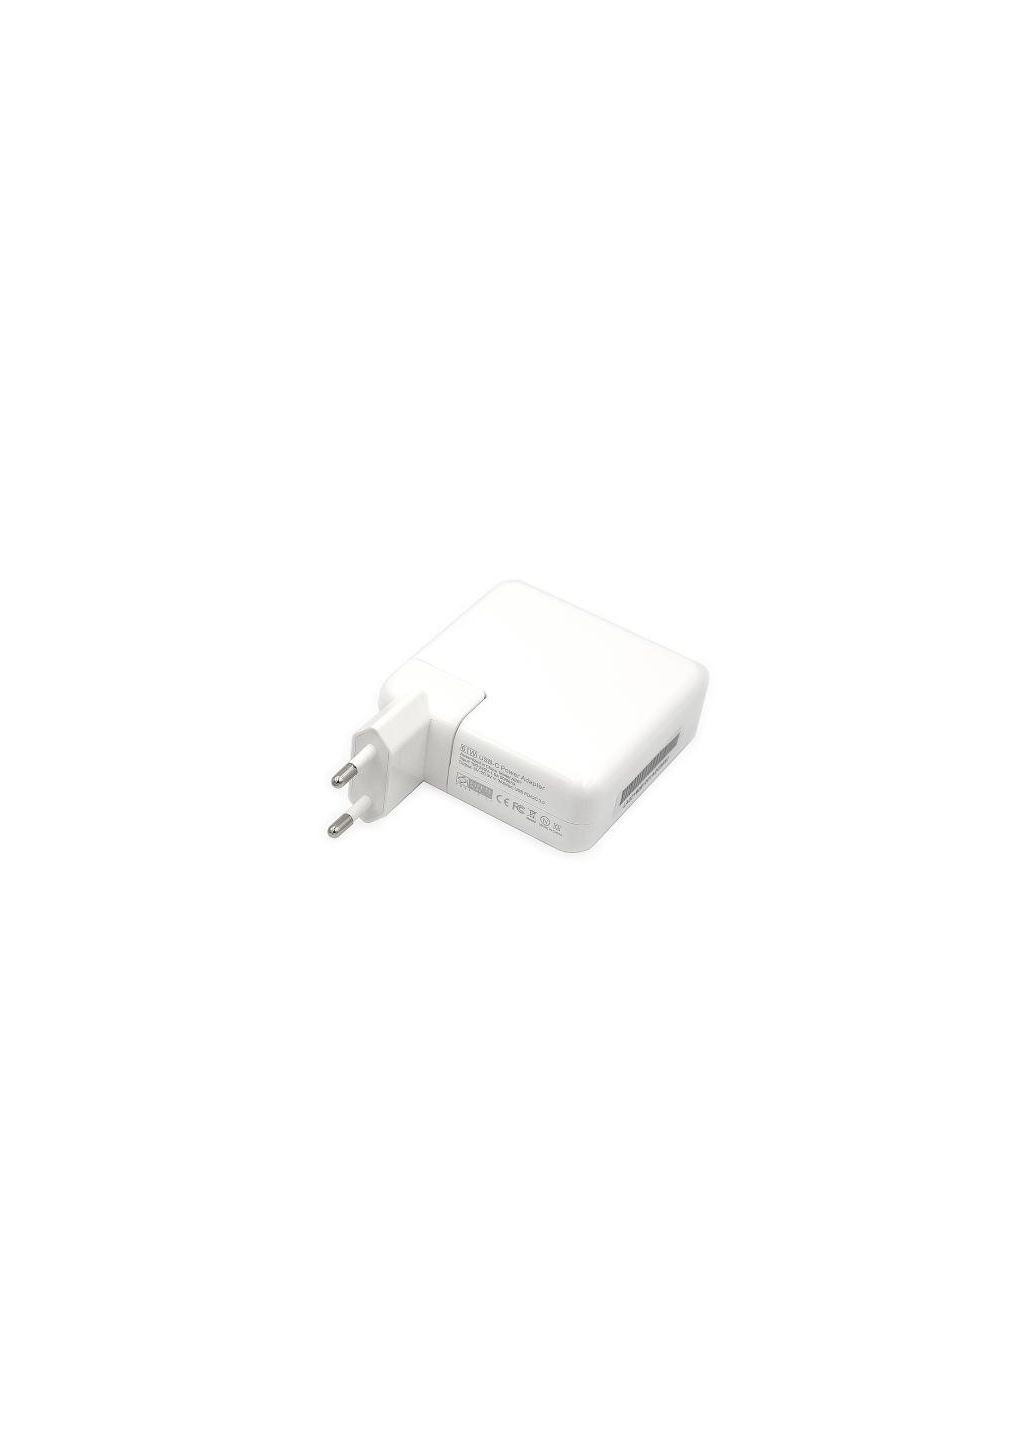 Блок питания к ноутбуку APPLE 220V, 20V 61W (USB TypeC) (AP61HCUSB) PowerPlant apple 220v, 20v 61w (usb type-c) (275103239)